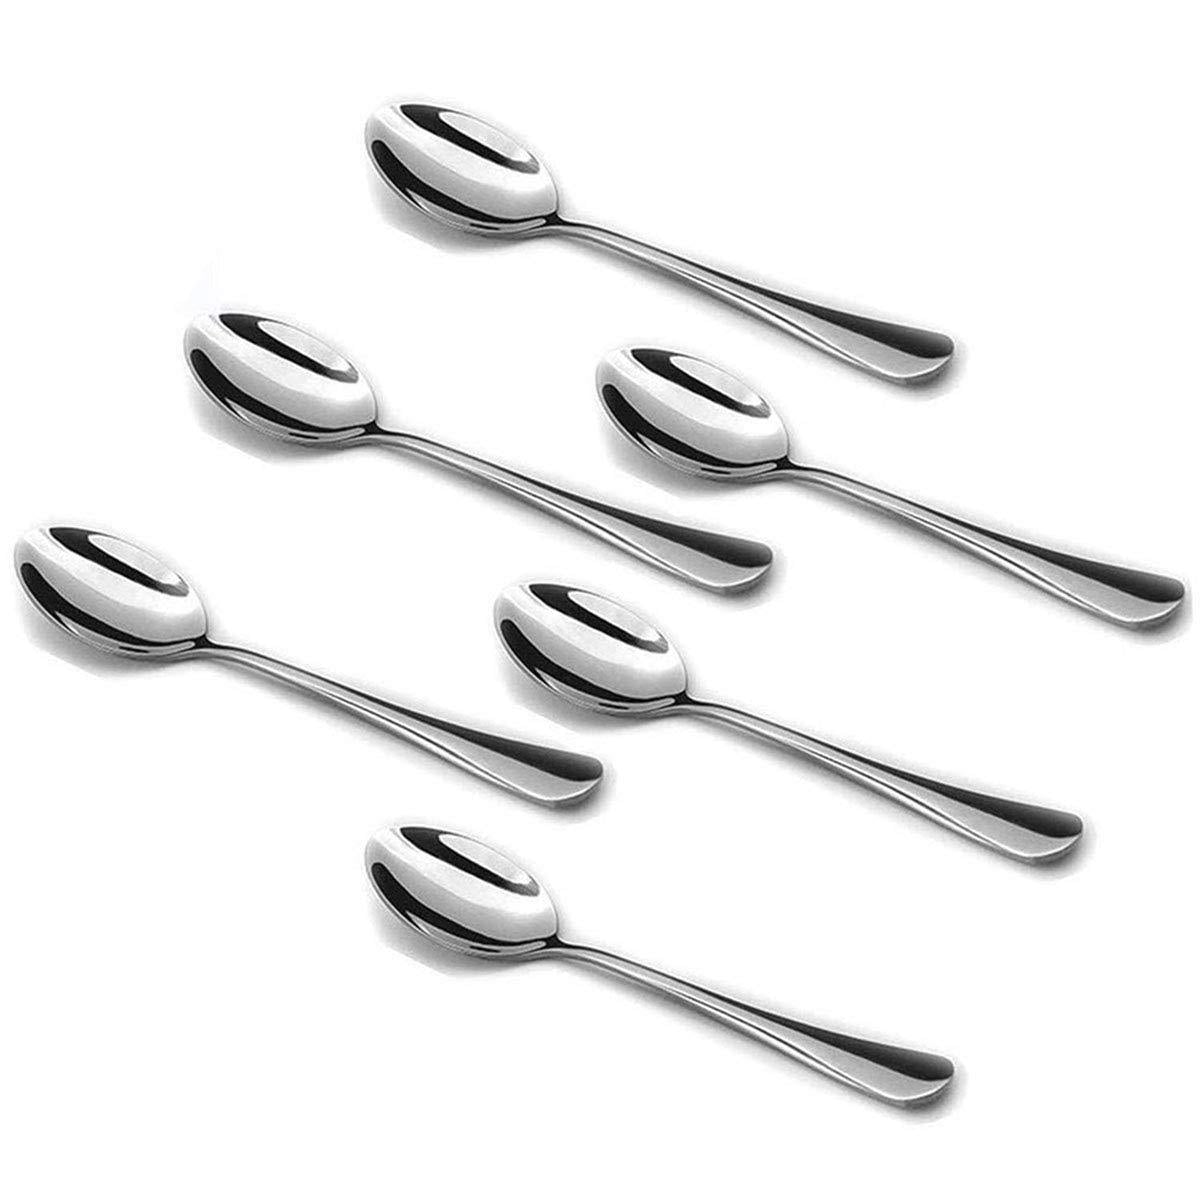 Utiao 12-Piece Coffee Spoon Black Stainless Steel Demitasse Espresso Spoons